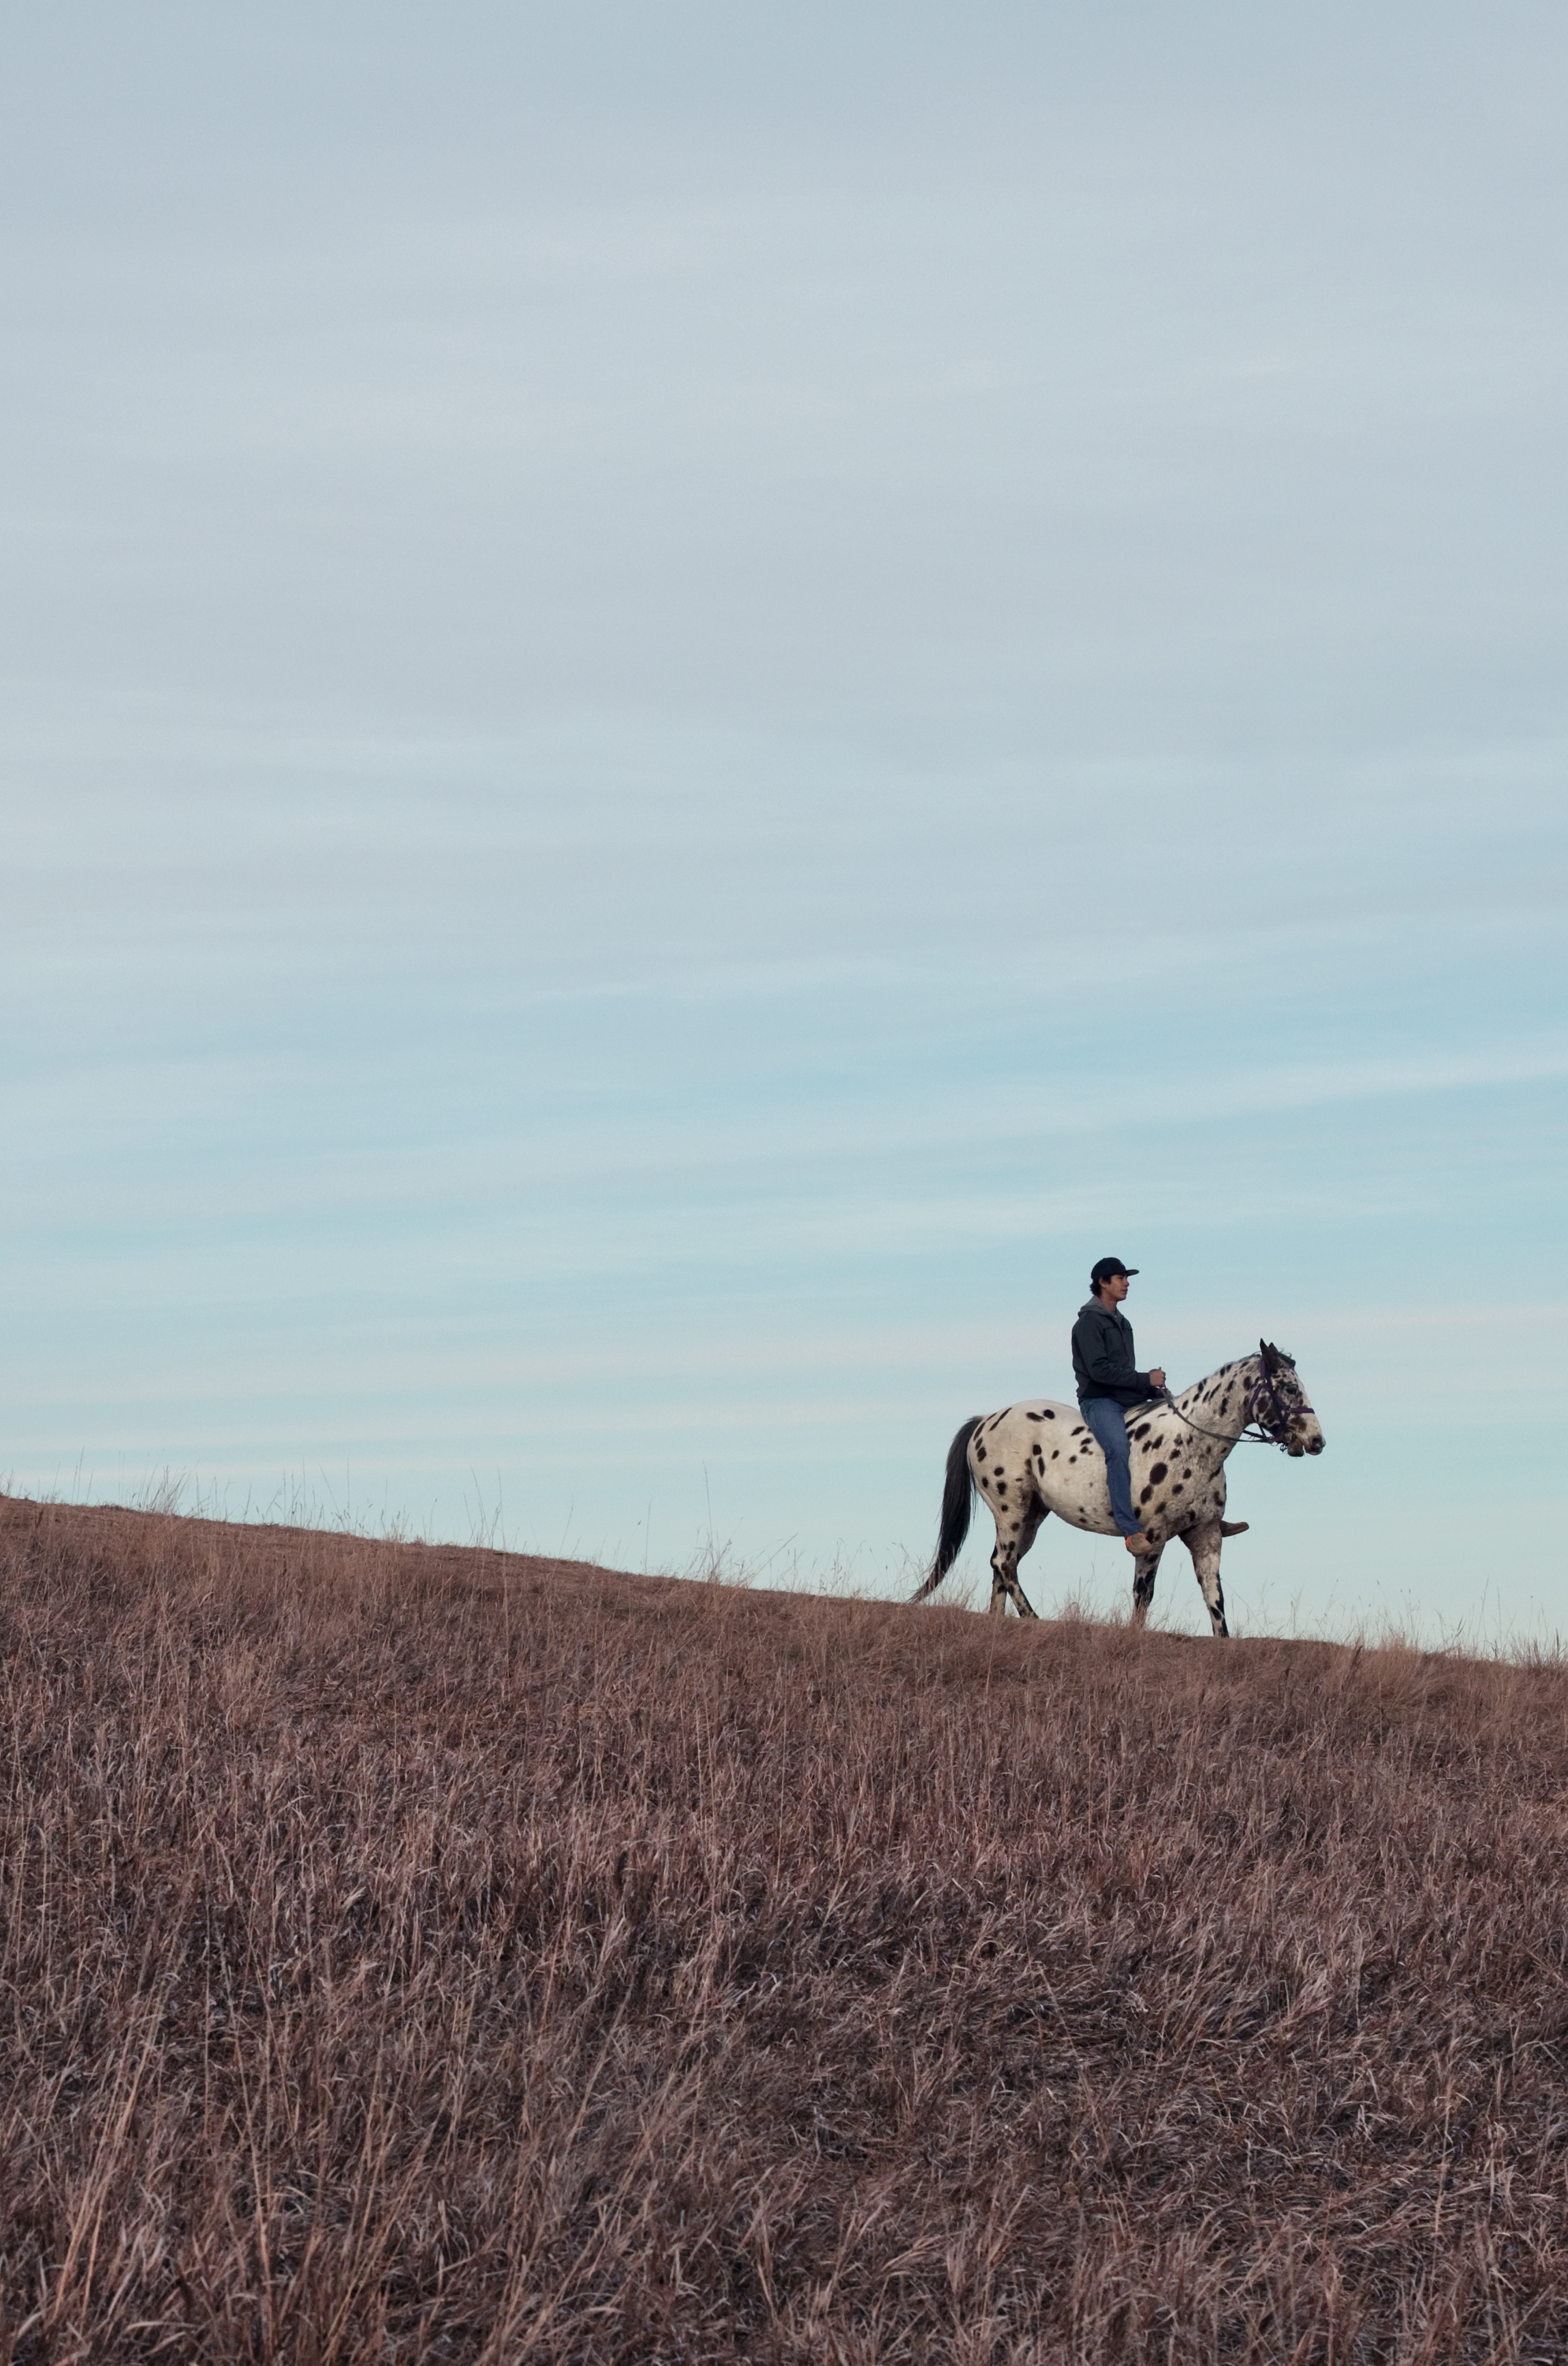 Man riding horse down Media Hill. Photo credit: Natalie Escobedo